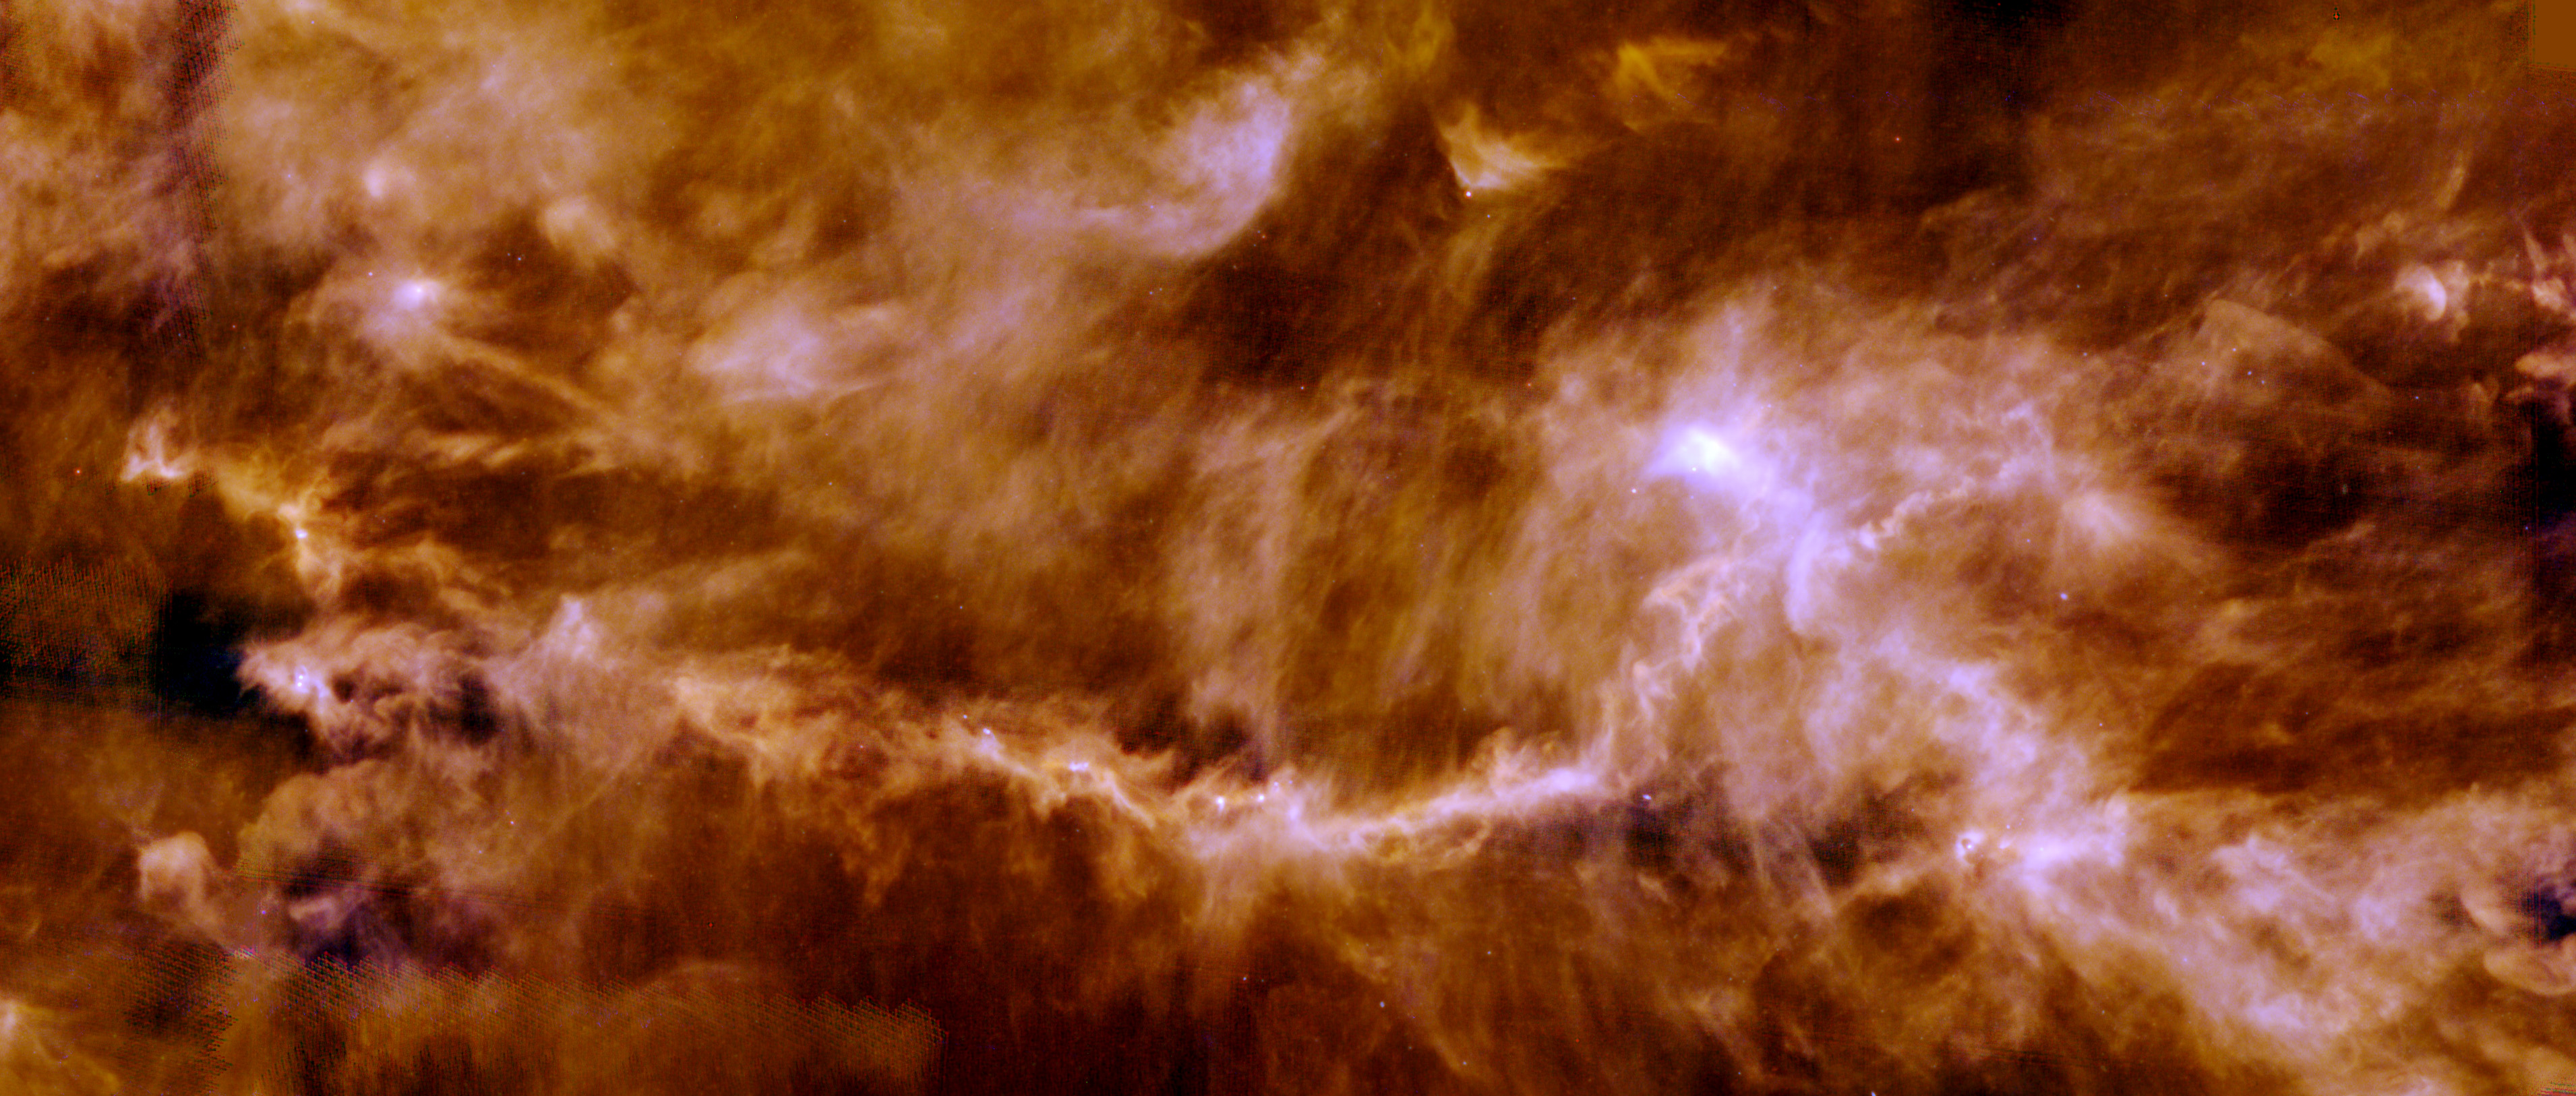 <span style="font-size:16px;position:relative;top:-50px">[ESA/Herschel/PACS, SPIRE/Gould Belt survey Key Programme/Palmeirim *et al.* (2013)](http://www.esa.int/spaceinimages/Images/2015/06/Stars_forming_in_the_Taurus_Molecular_Cloud)</span>